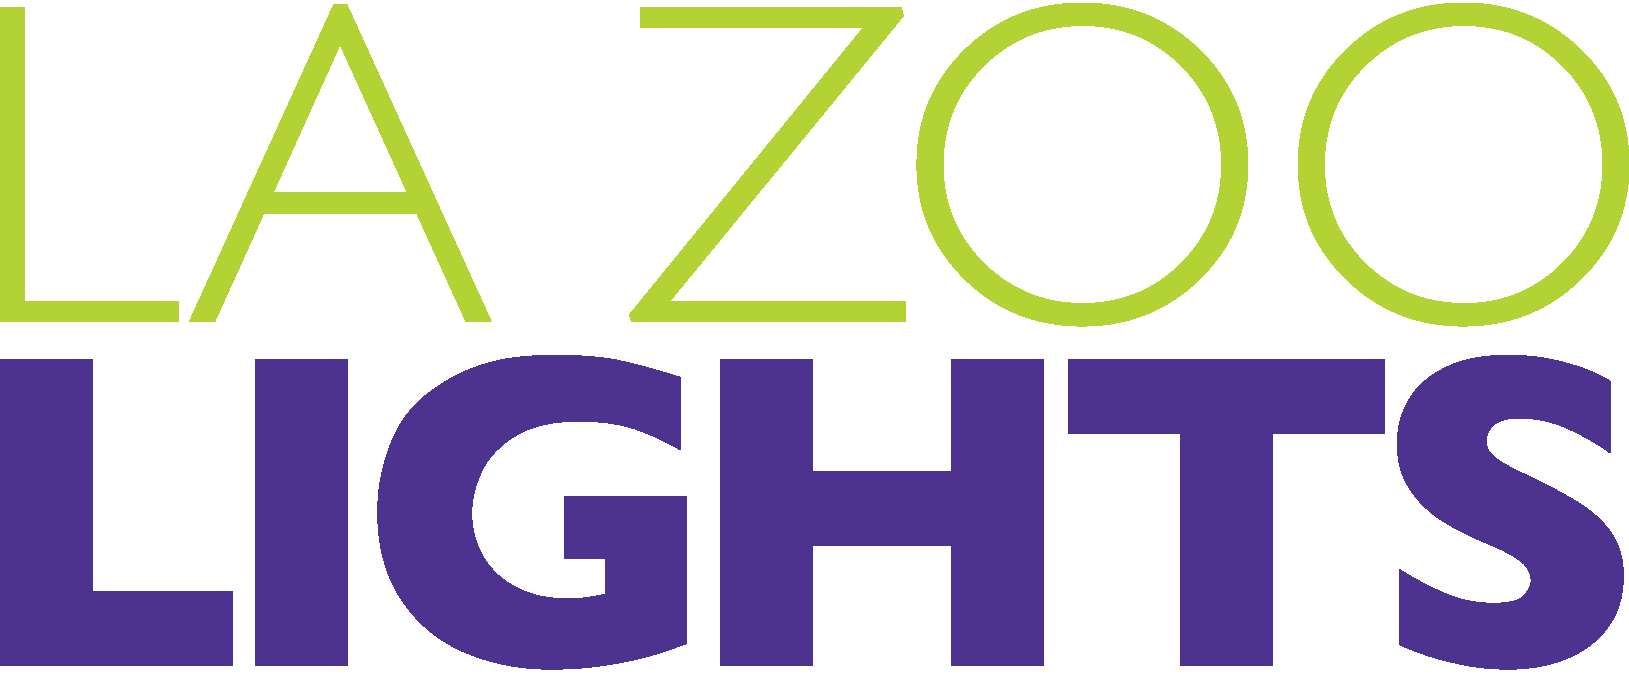 LA Zoo Logo - Los Angeles Zoo and Botanical Gardens Los Angeles Zoo and Botanical